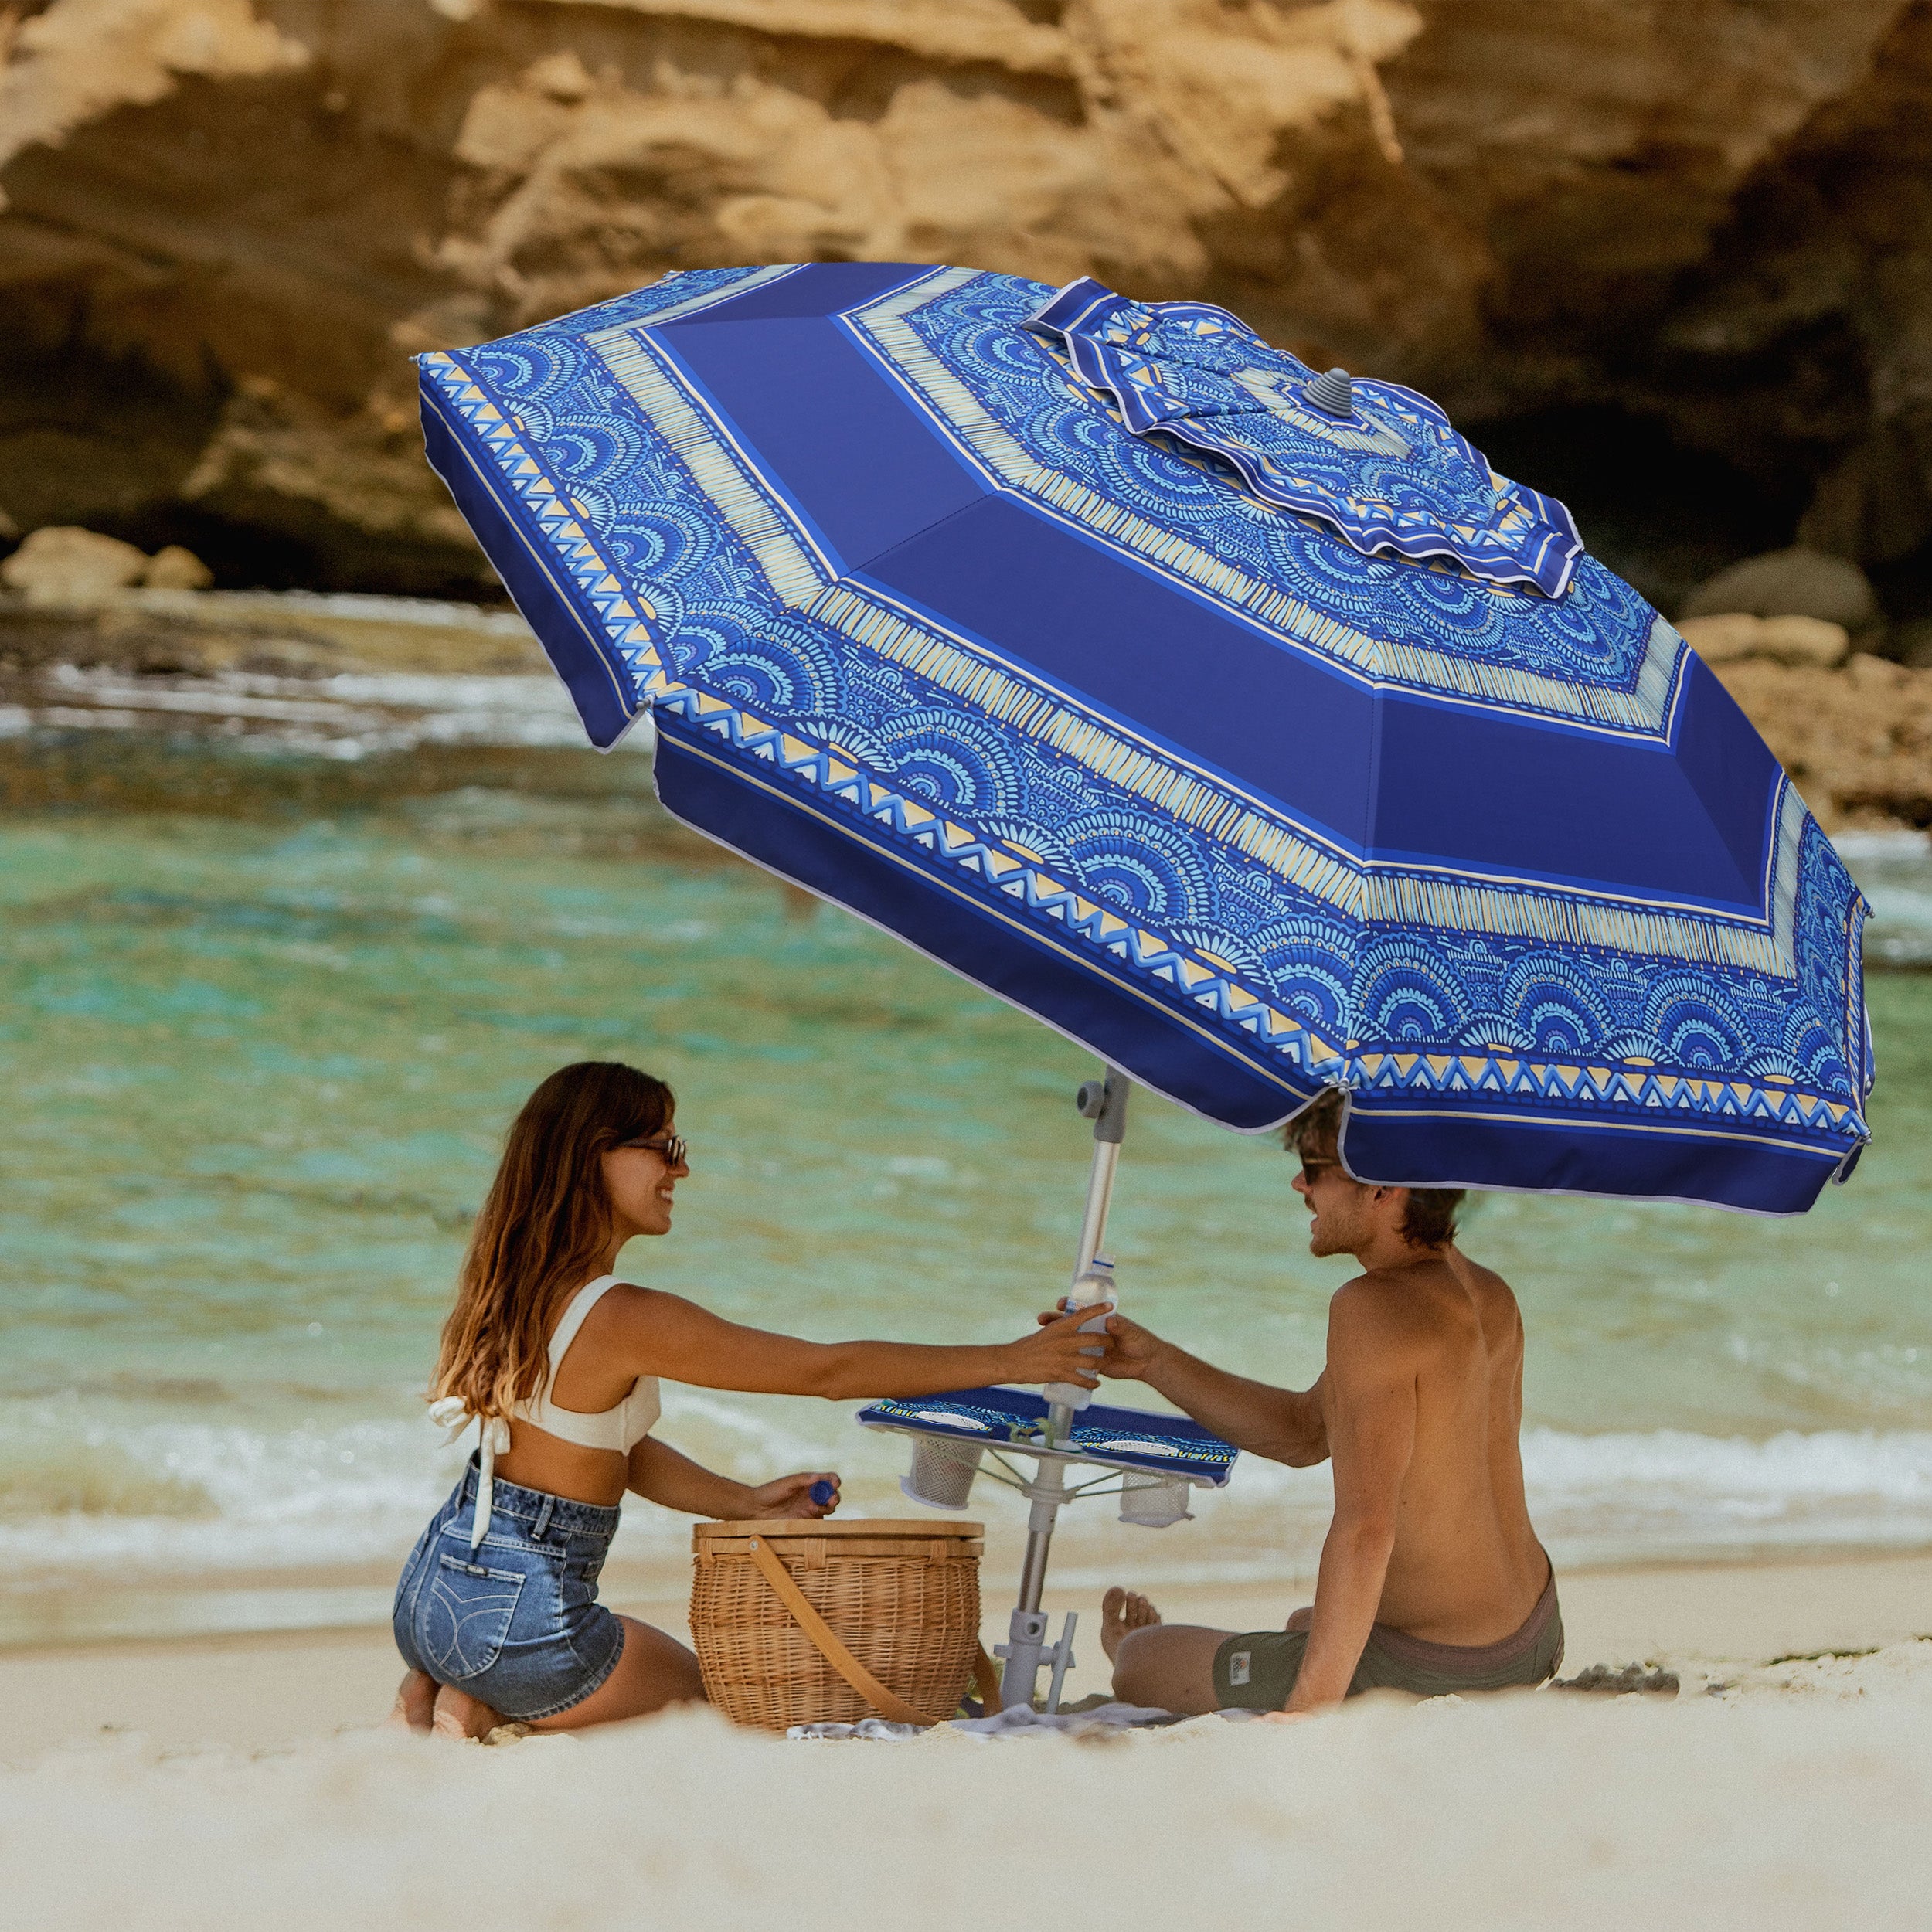 AMMSUN 7ft Beach Umbrella with sand anchor, Built-in Table Haute Stripes